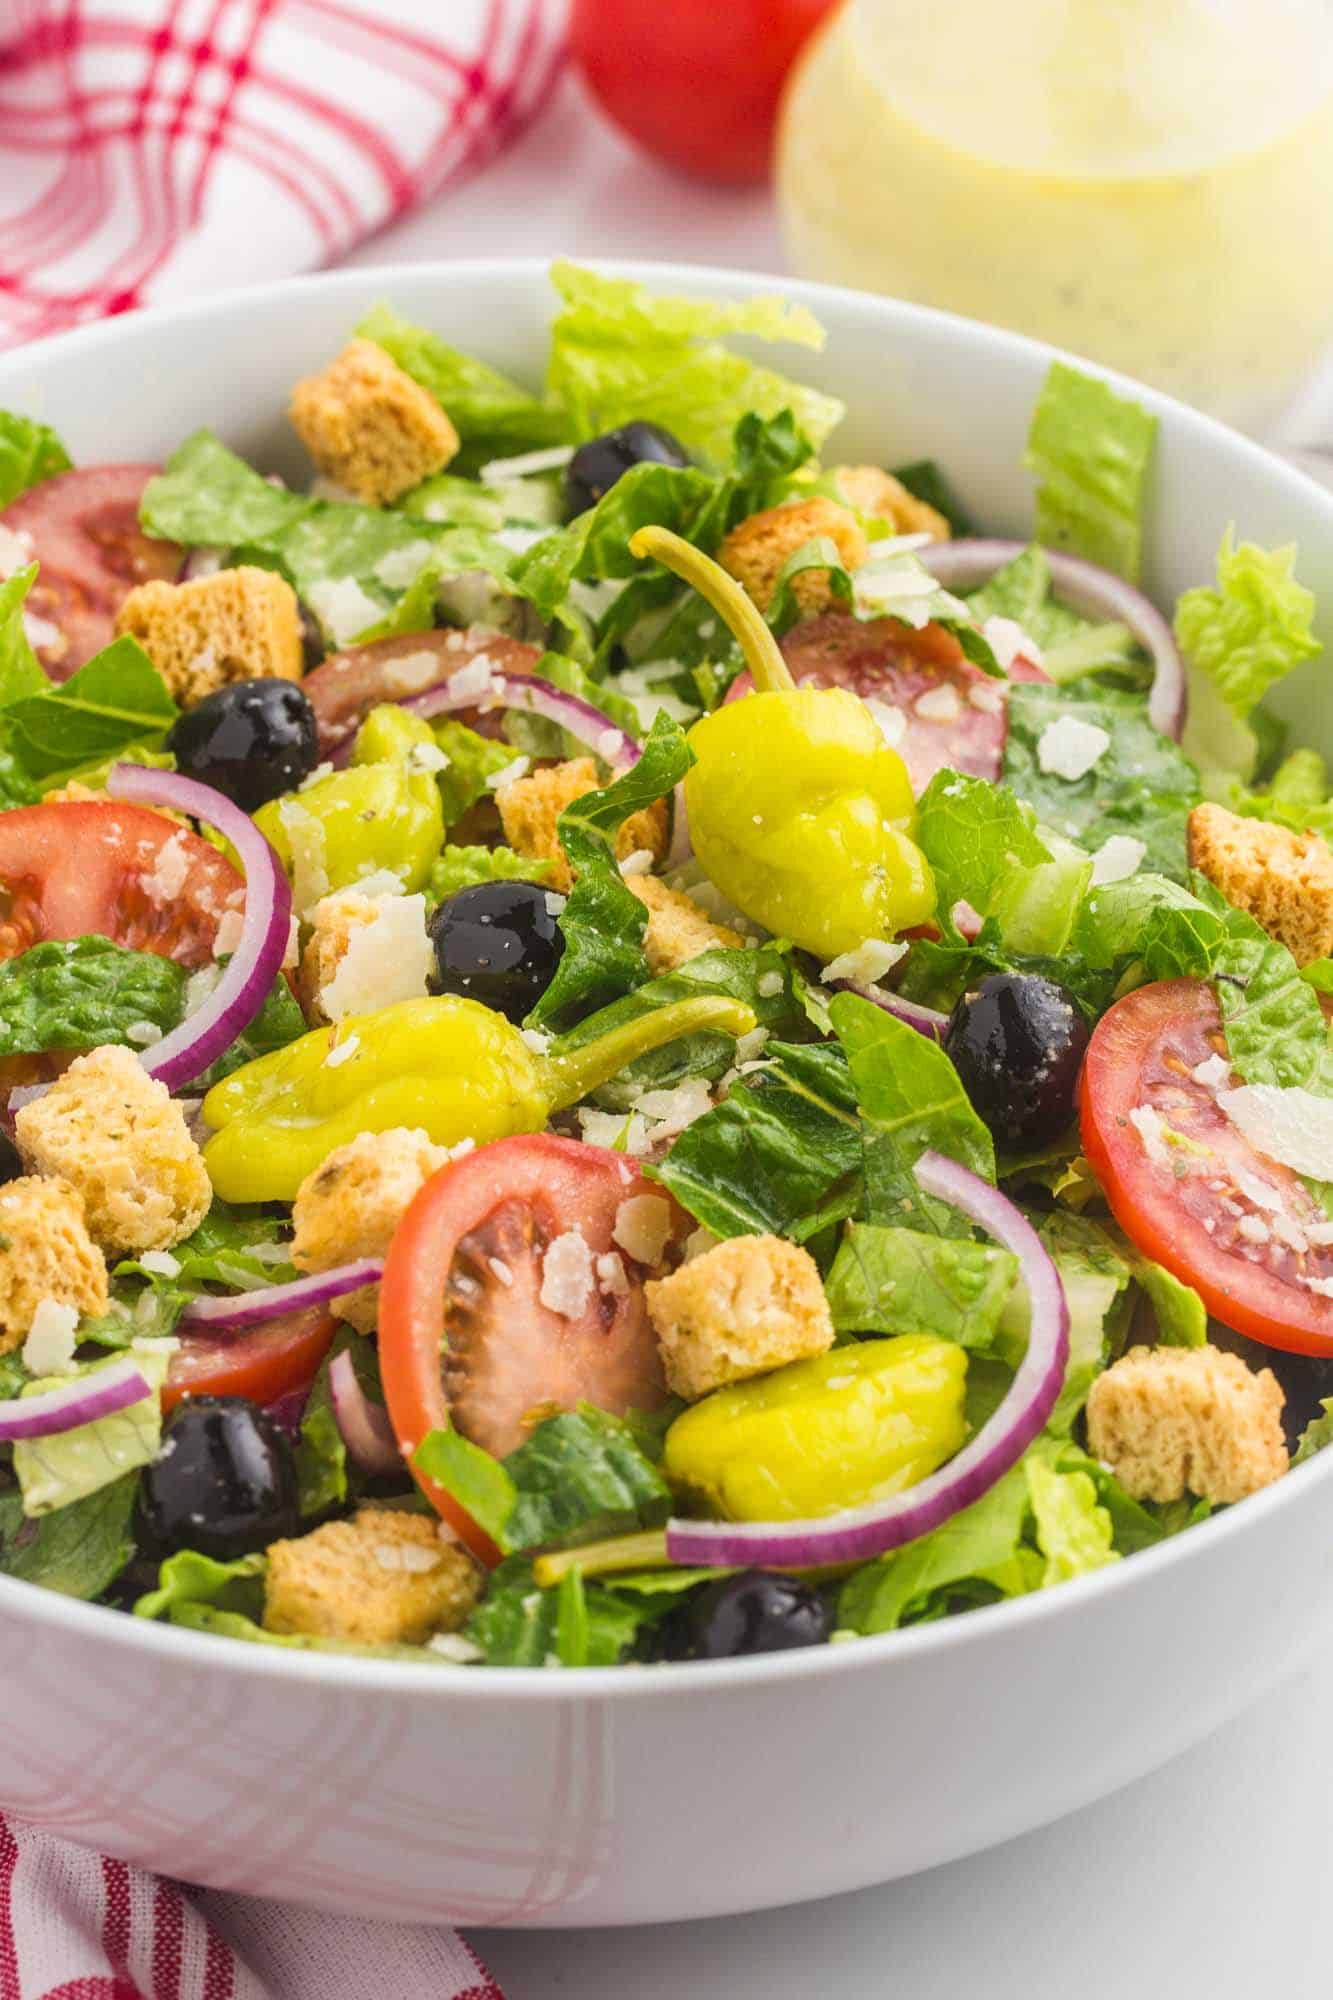 Olive Garden Salad 